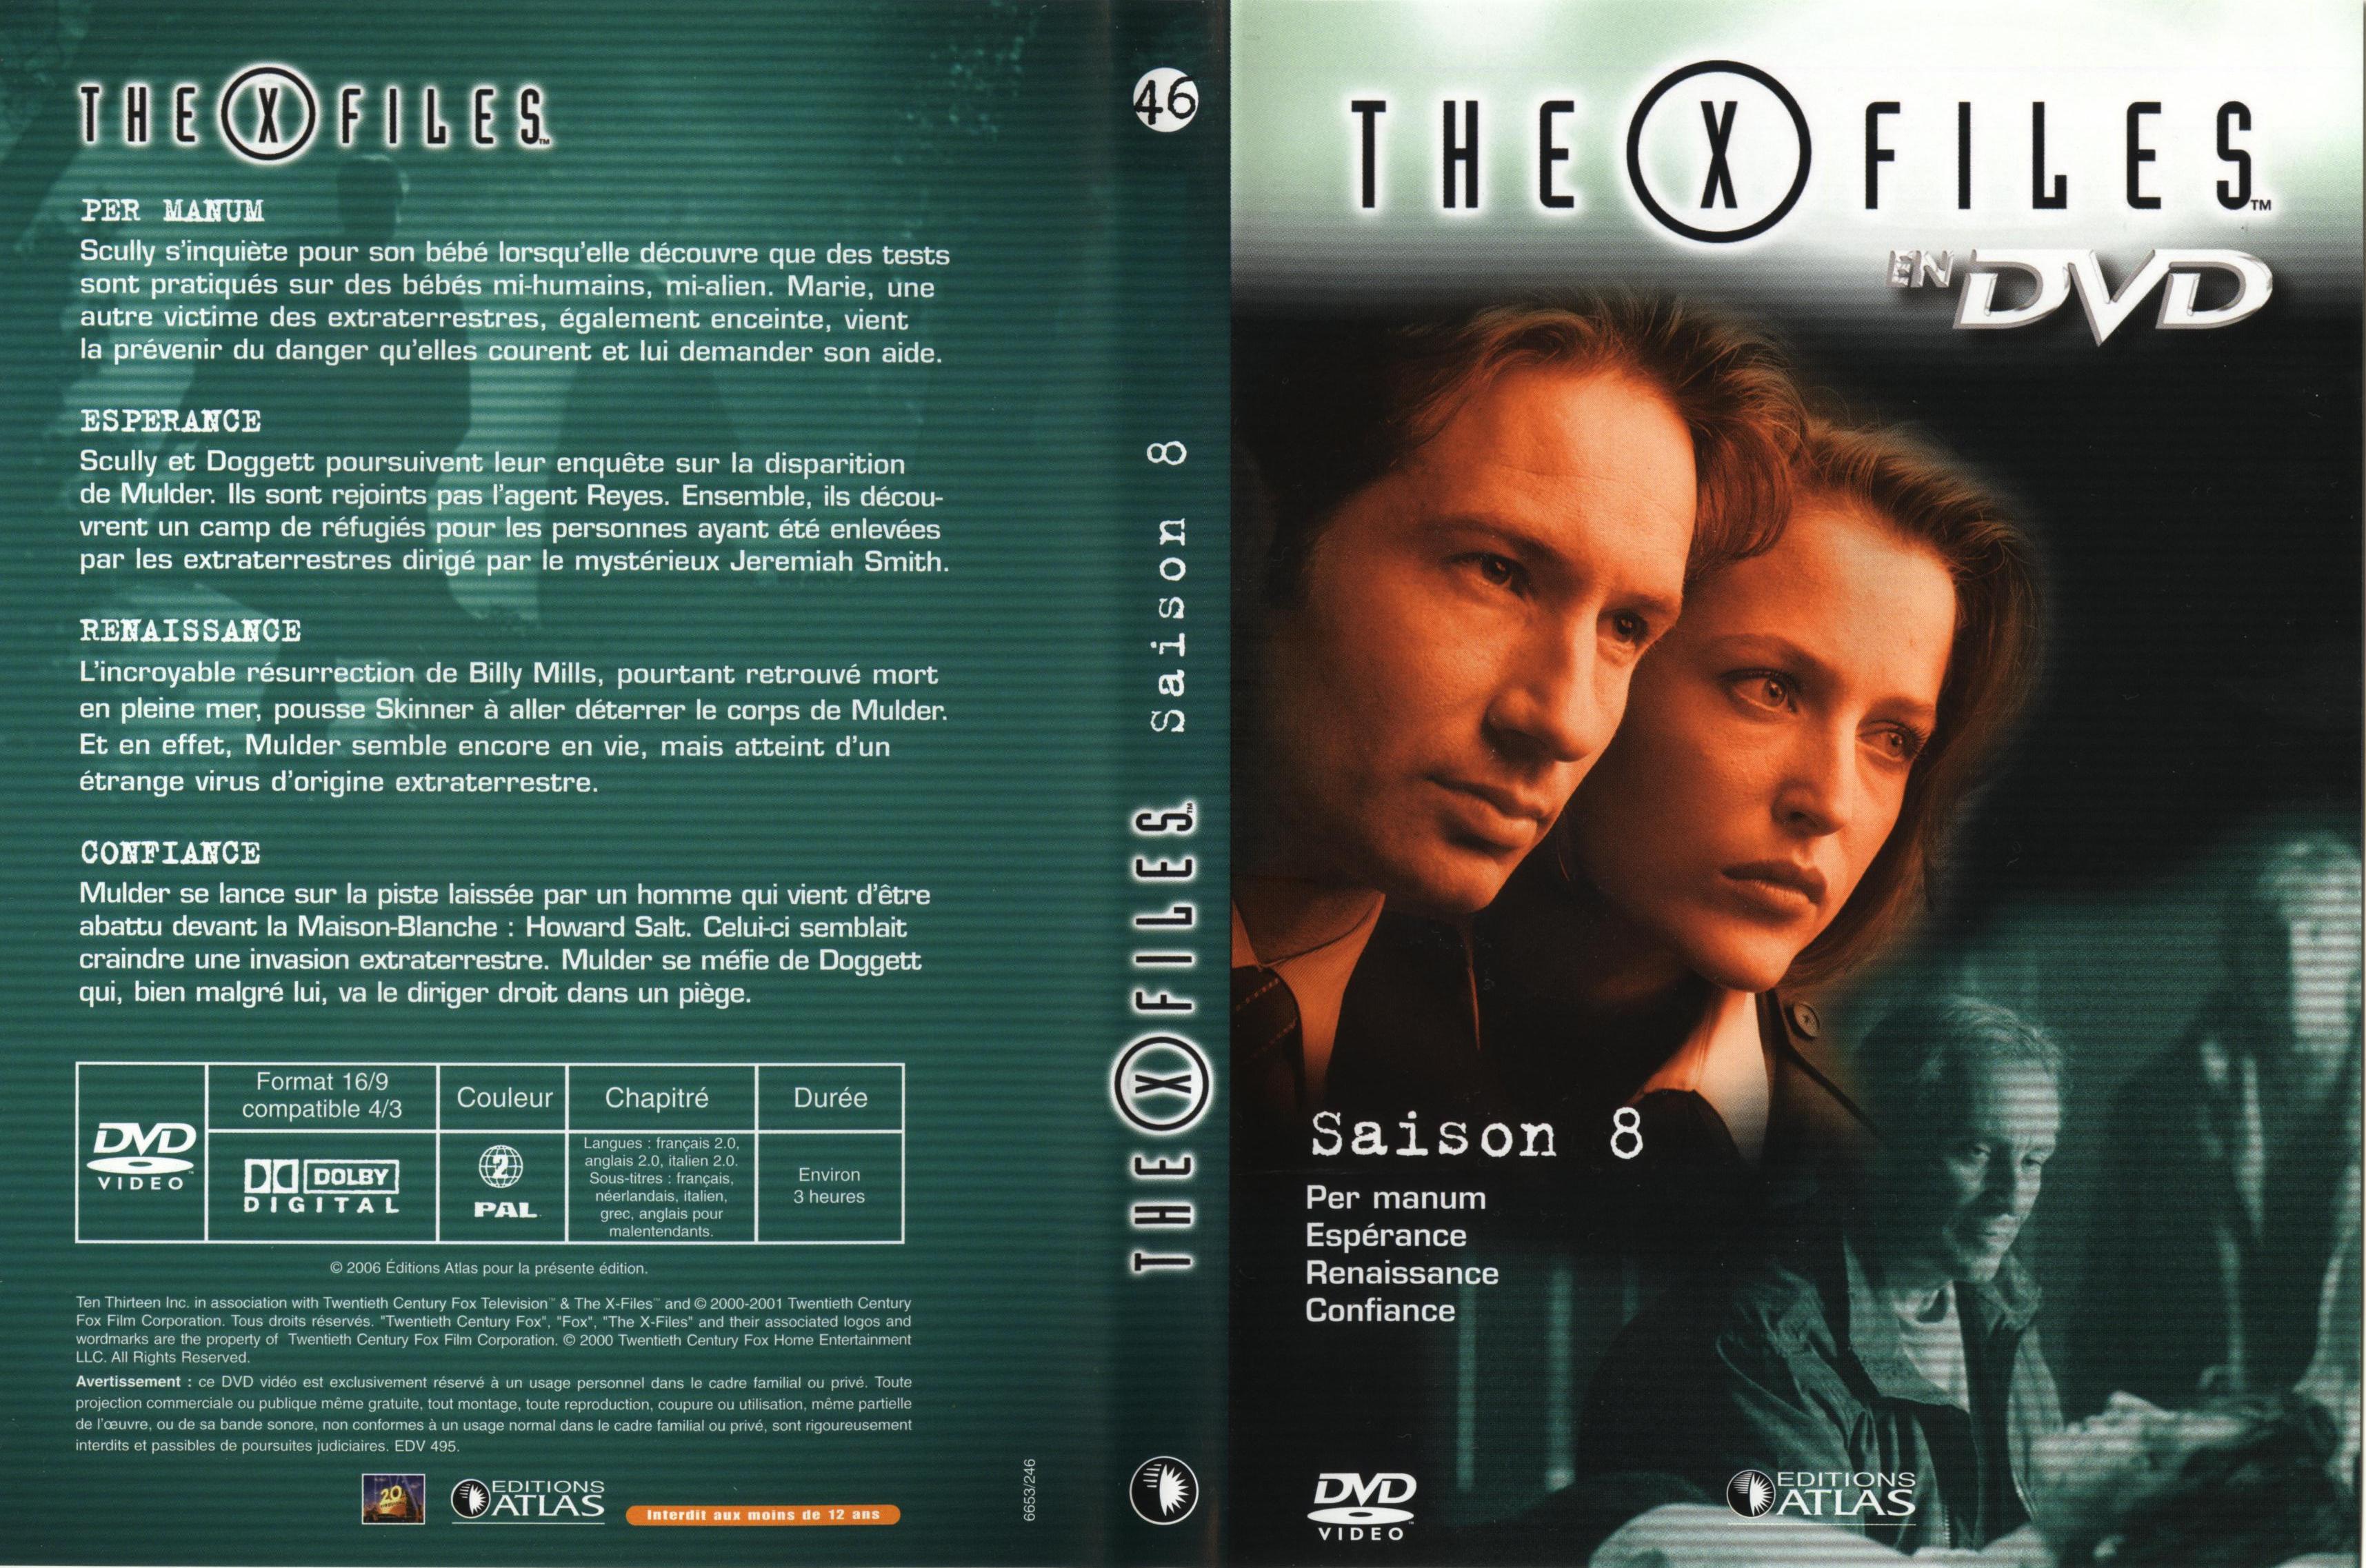 Jaquette DVD X Files saison 8 DVD 46